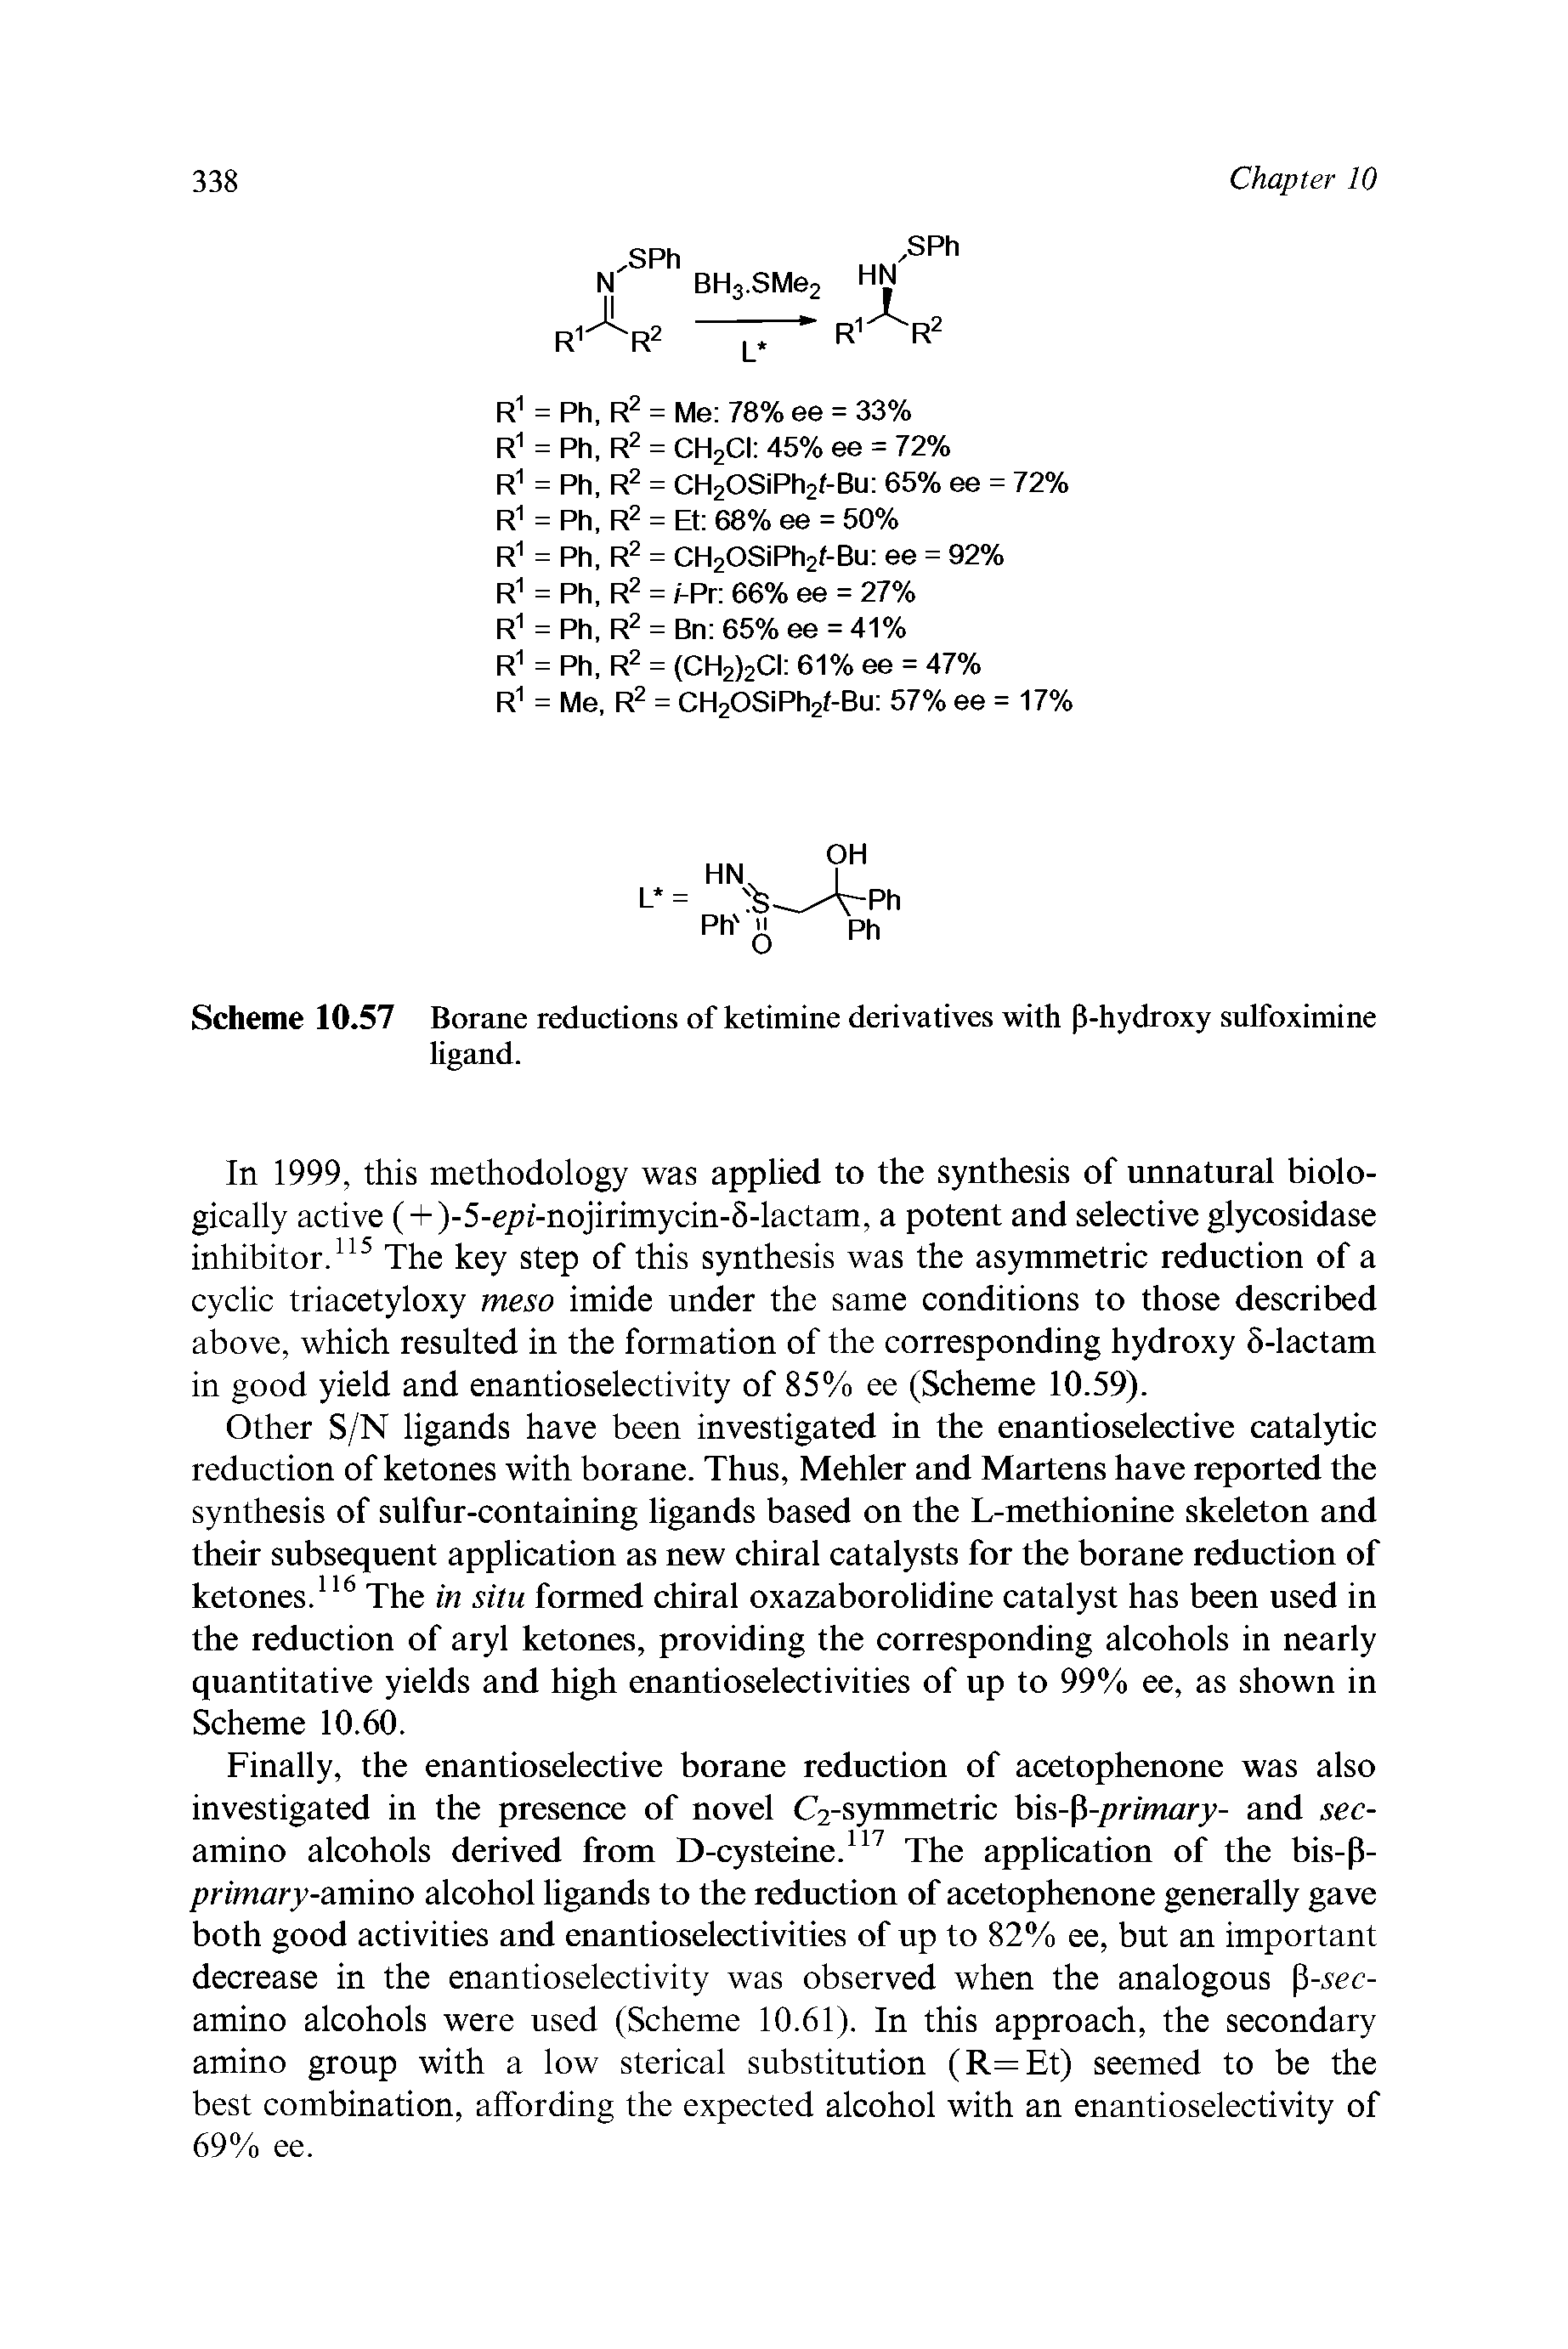 Scheme 10.57 Borane reductions of ketimine derivatives with P-hydroxy sulfoximine ligand.